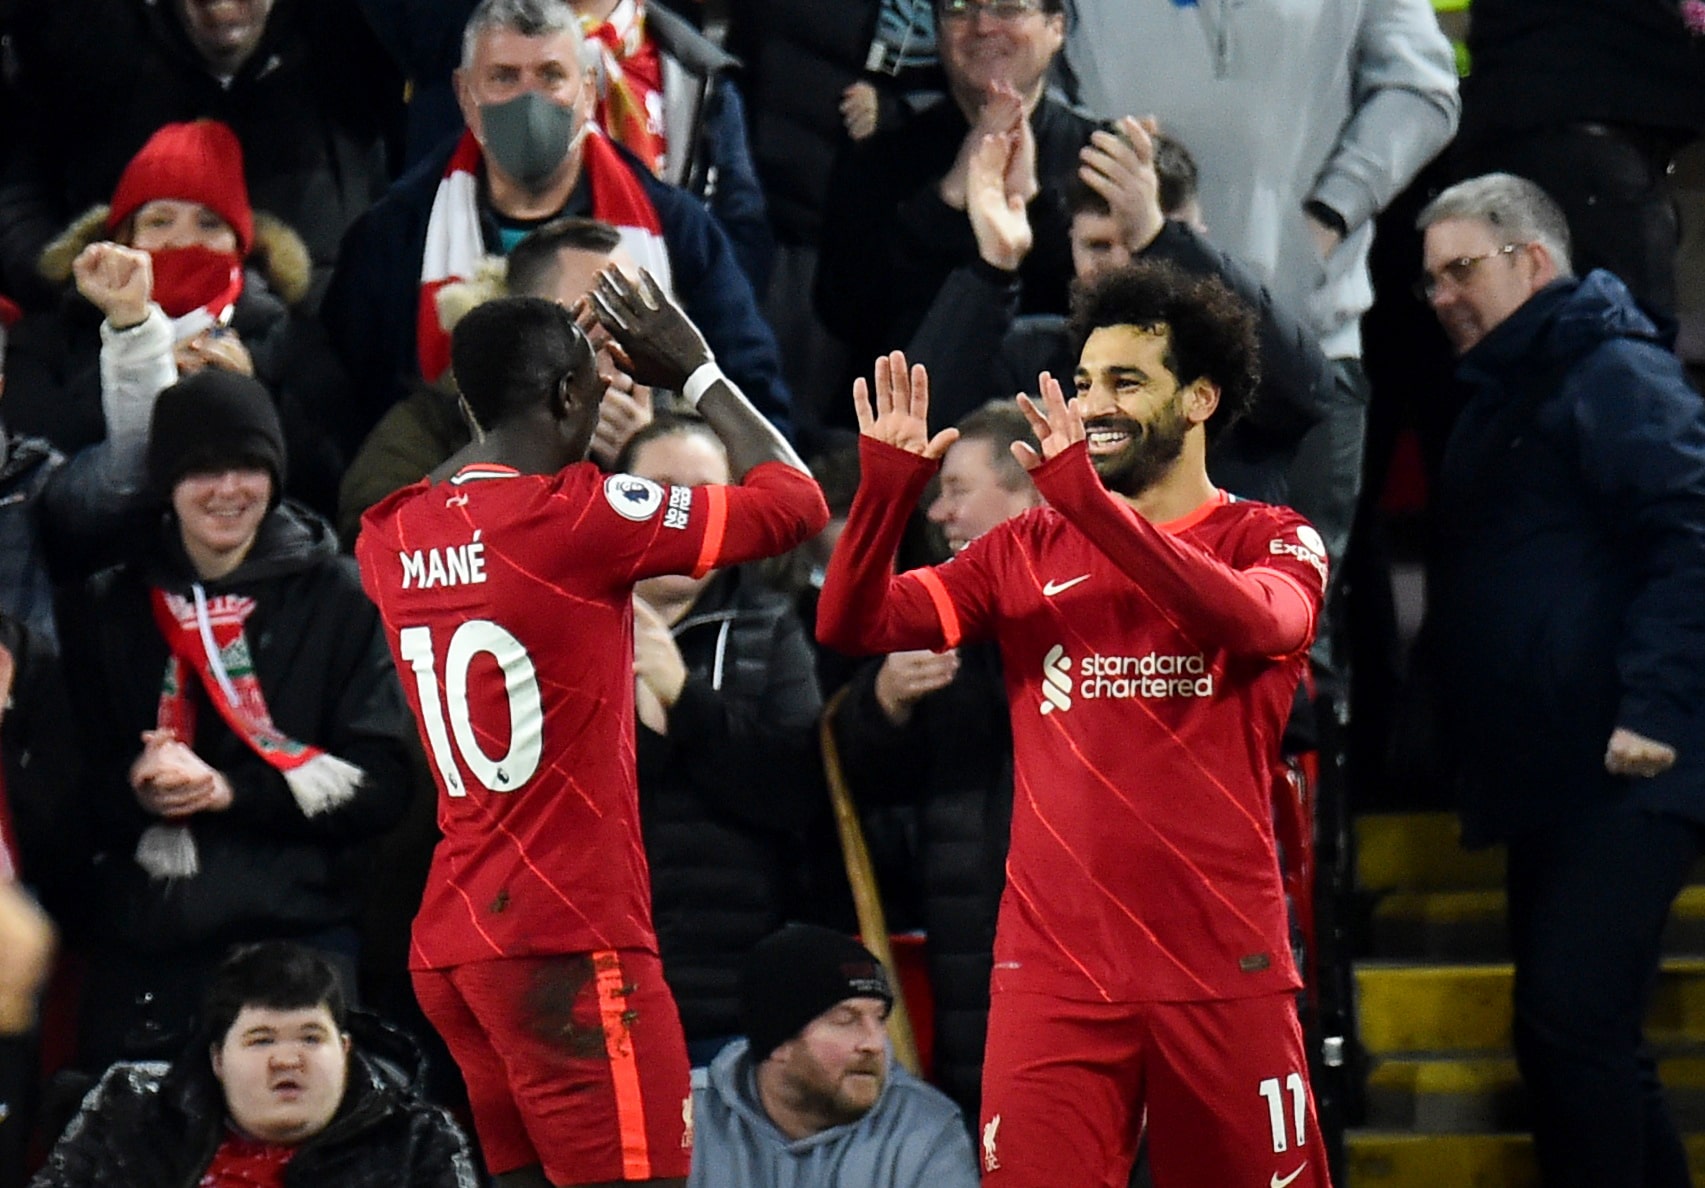  Liverpool's Mohamed Salah celebrates scoring against Burnley alongside teammate Sadio Mane during the Double Gameweek 34 of the Fantasy Premier League season.